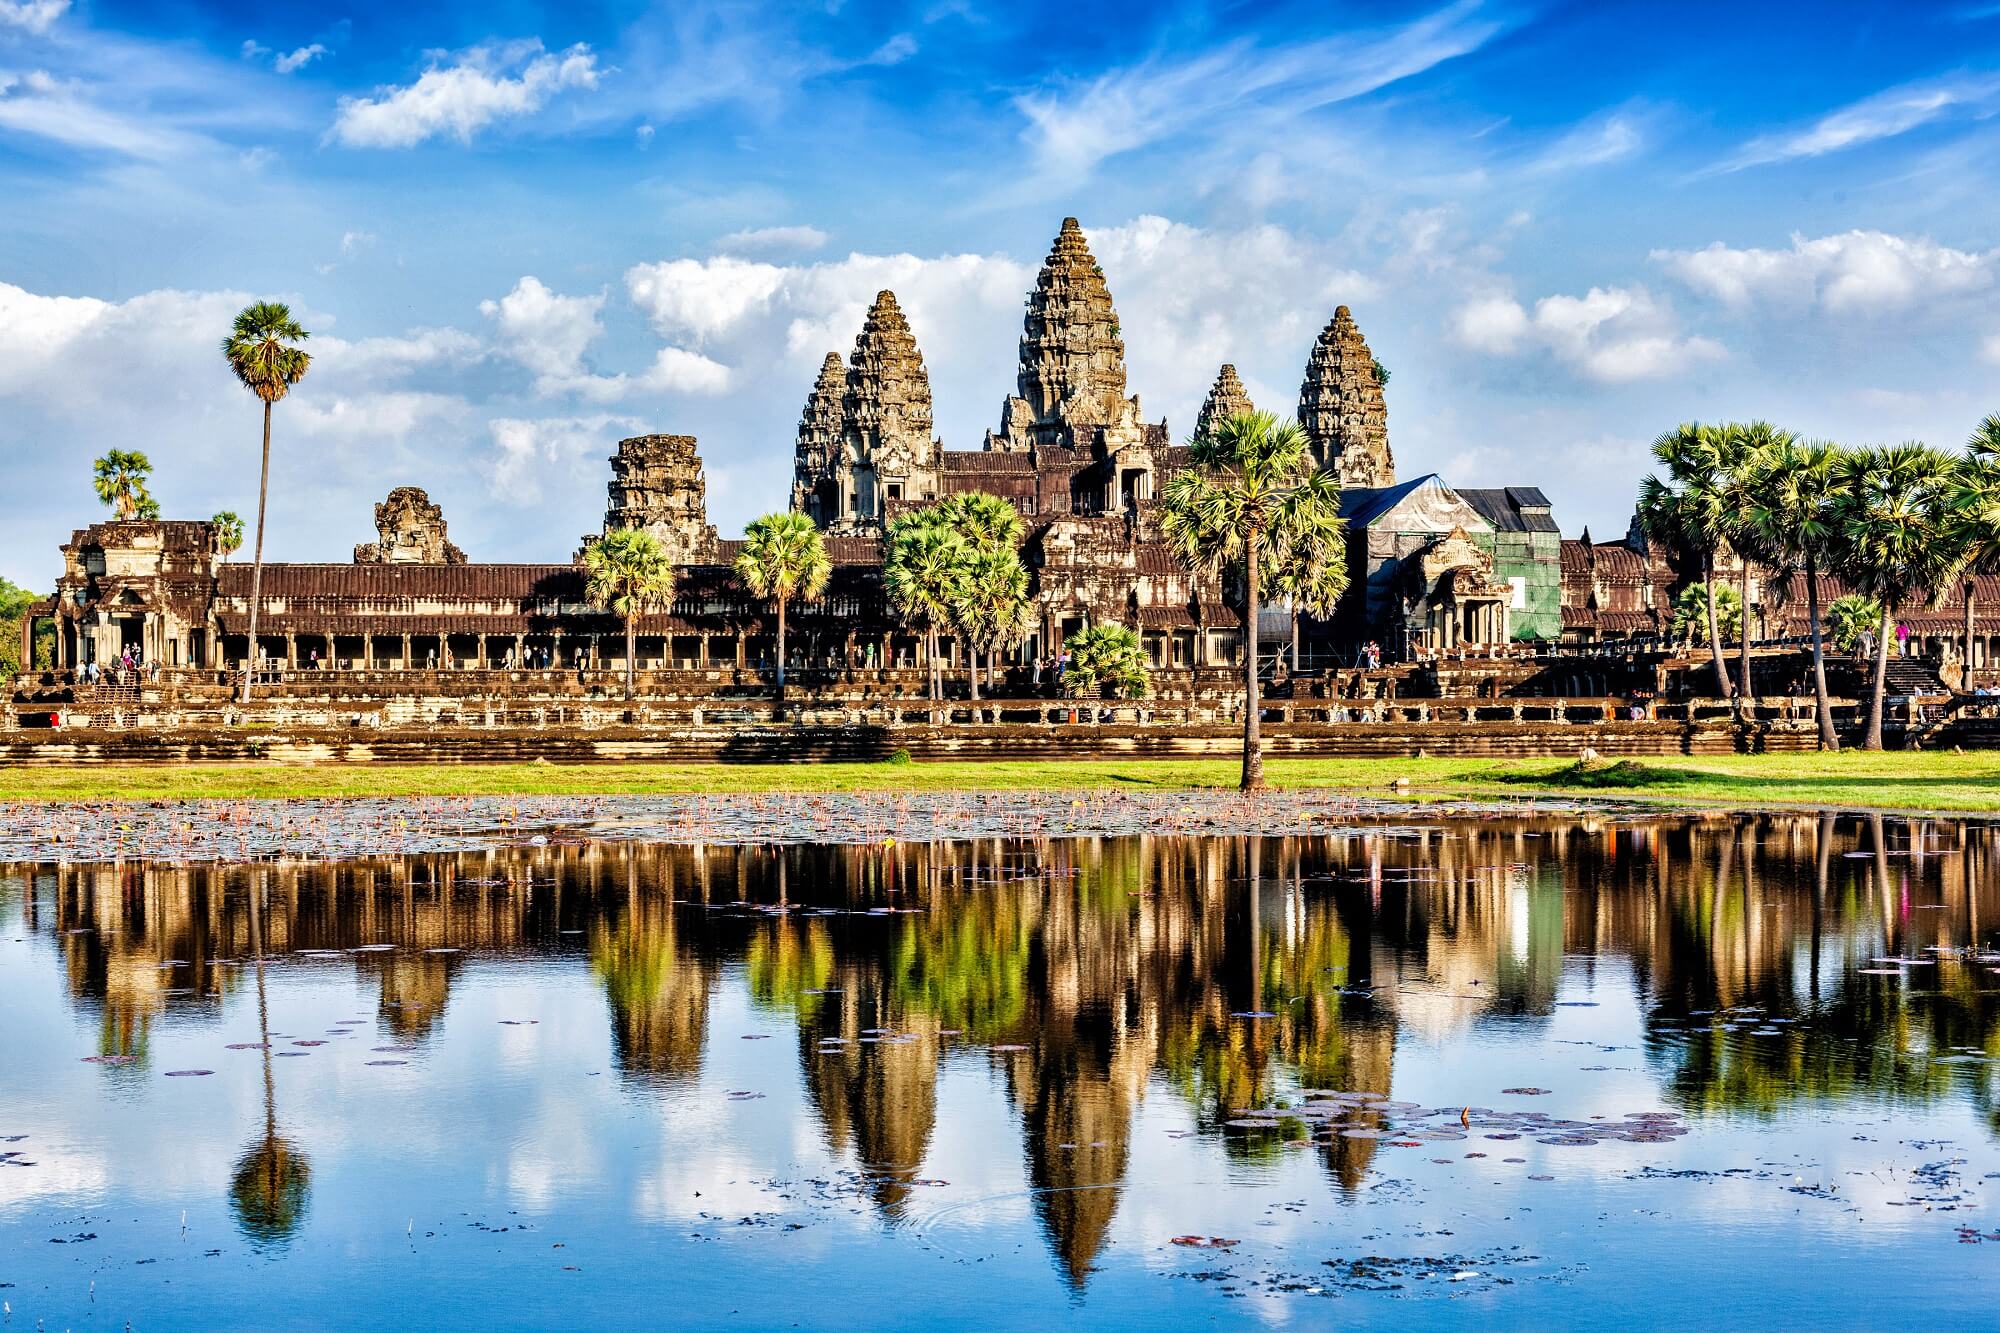 Die Tempelanlage von Angkor Wat in Siem Reap in Kambodscha